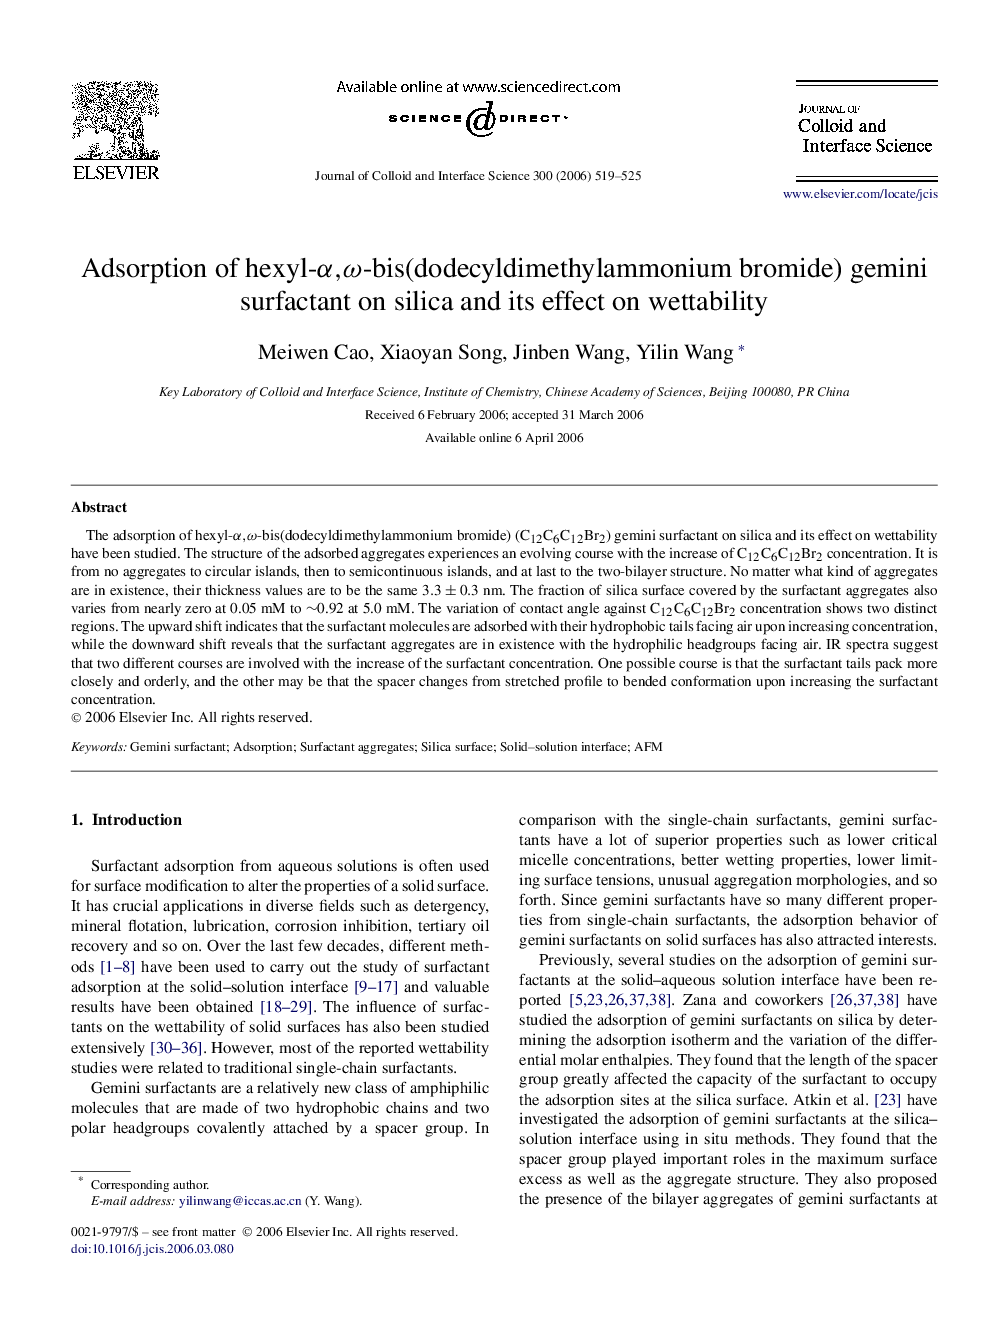 Adsorption of hexyl-α,ωα,ω-bis(dodecyldimethylammonium bromide) gemini surfactant on silica and its effect on wettability